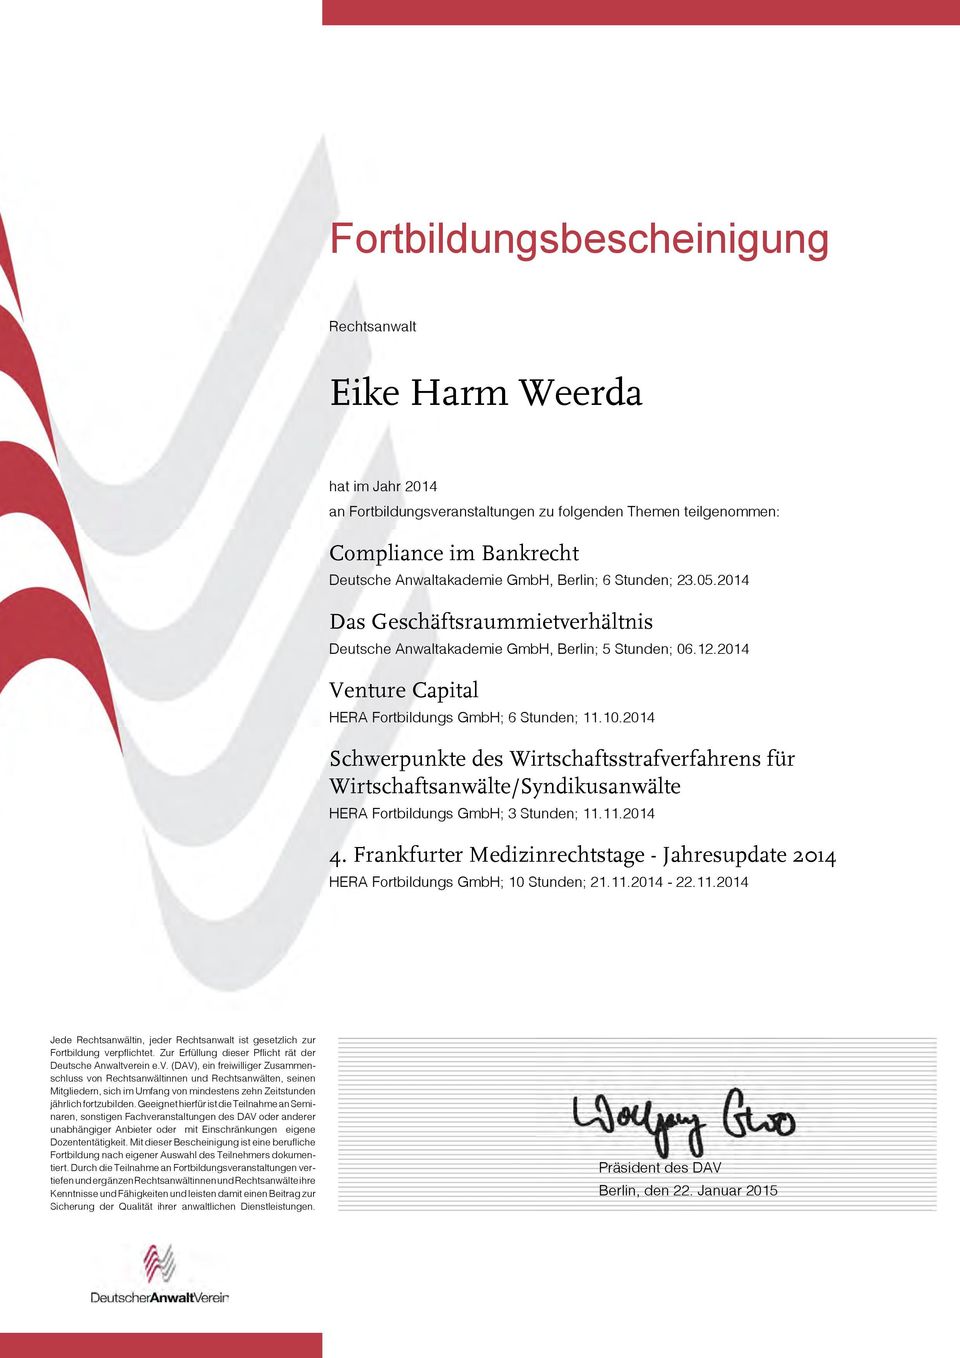 2014 Venture Capital HERA Fortbildungs GmbH; 6 Stunden; 11.10.